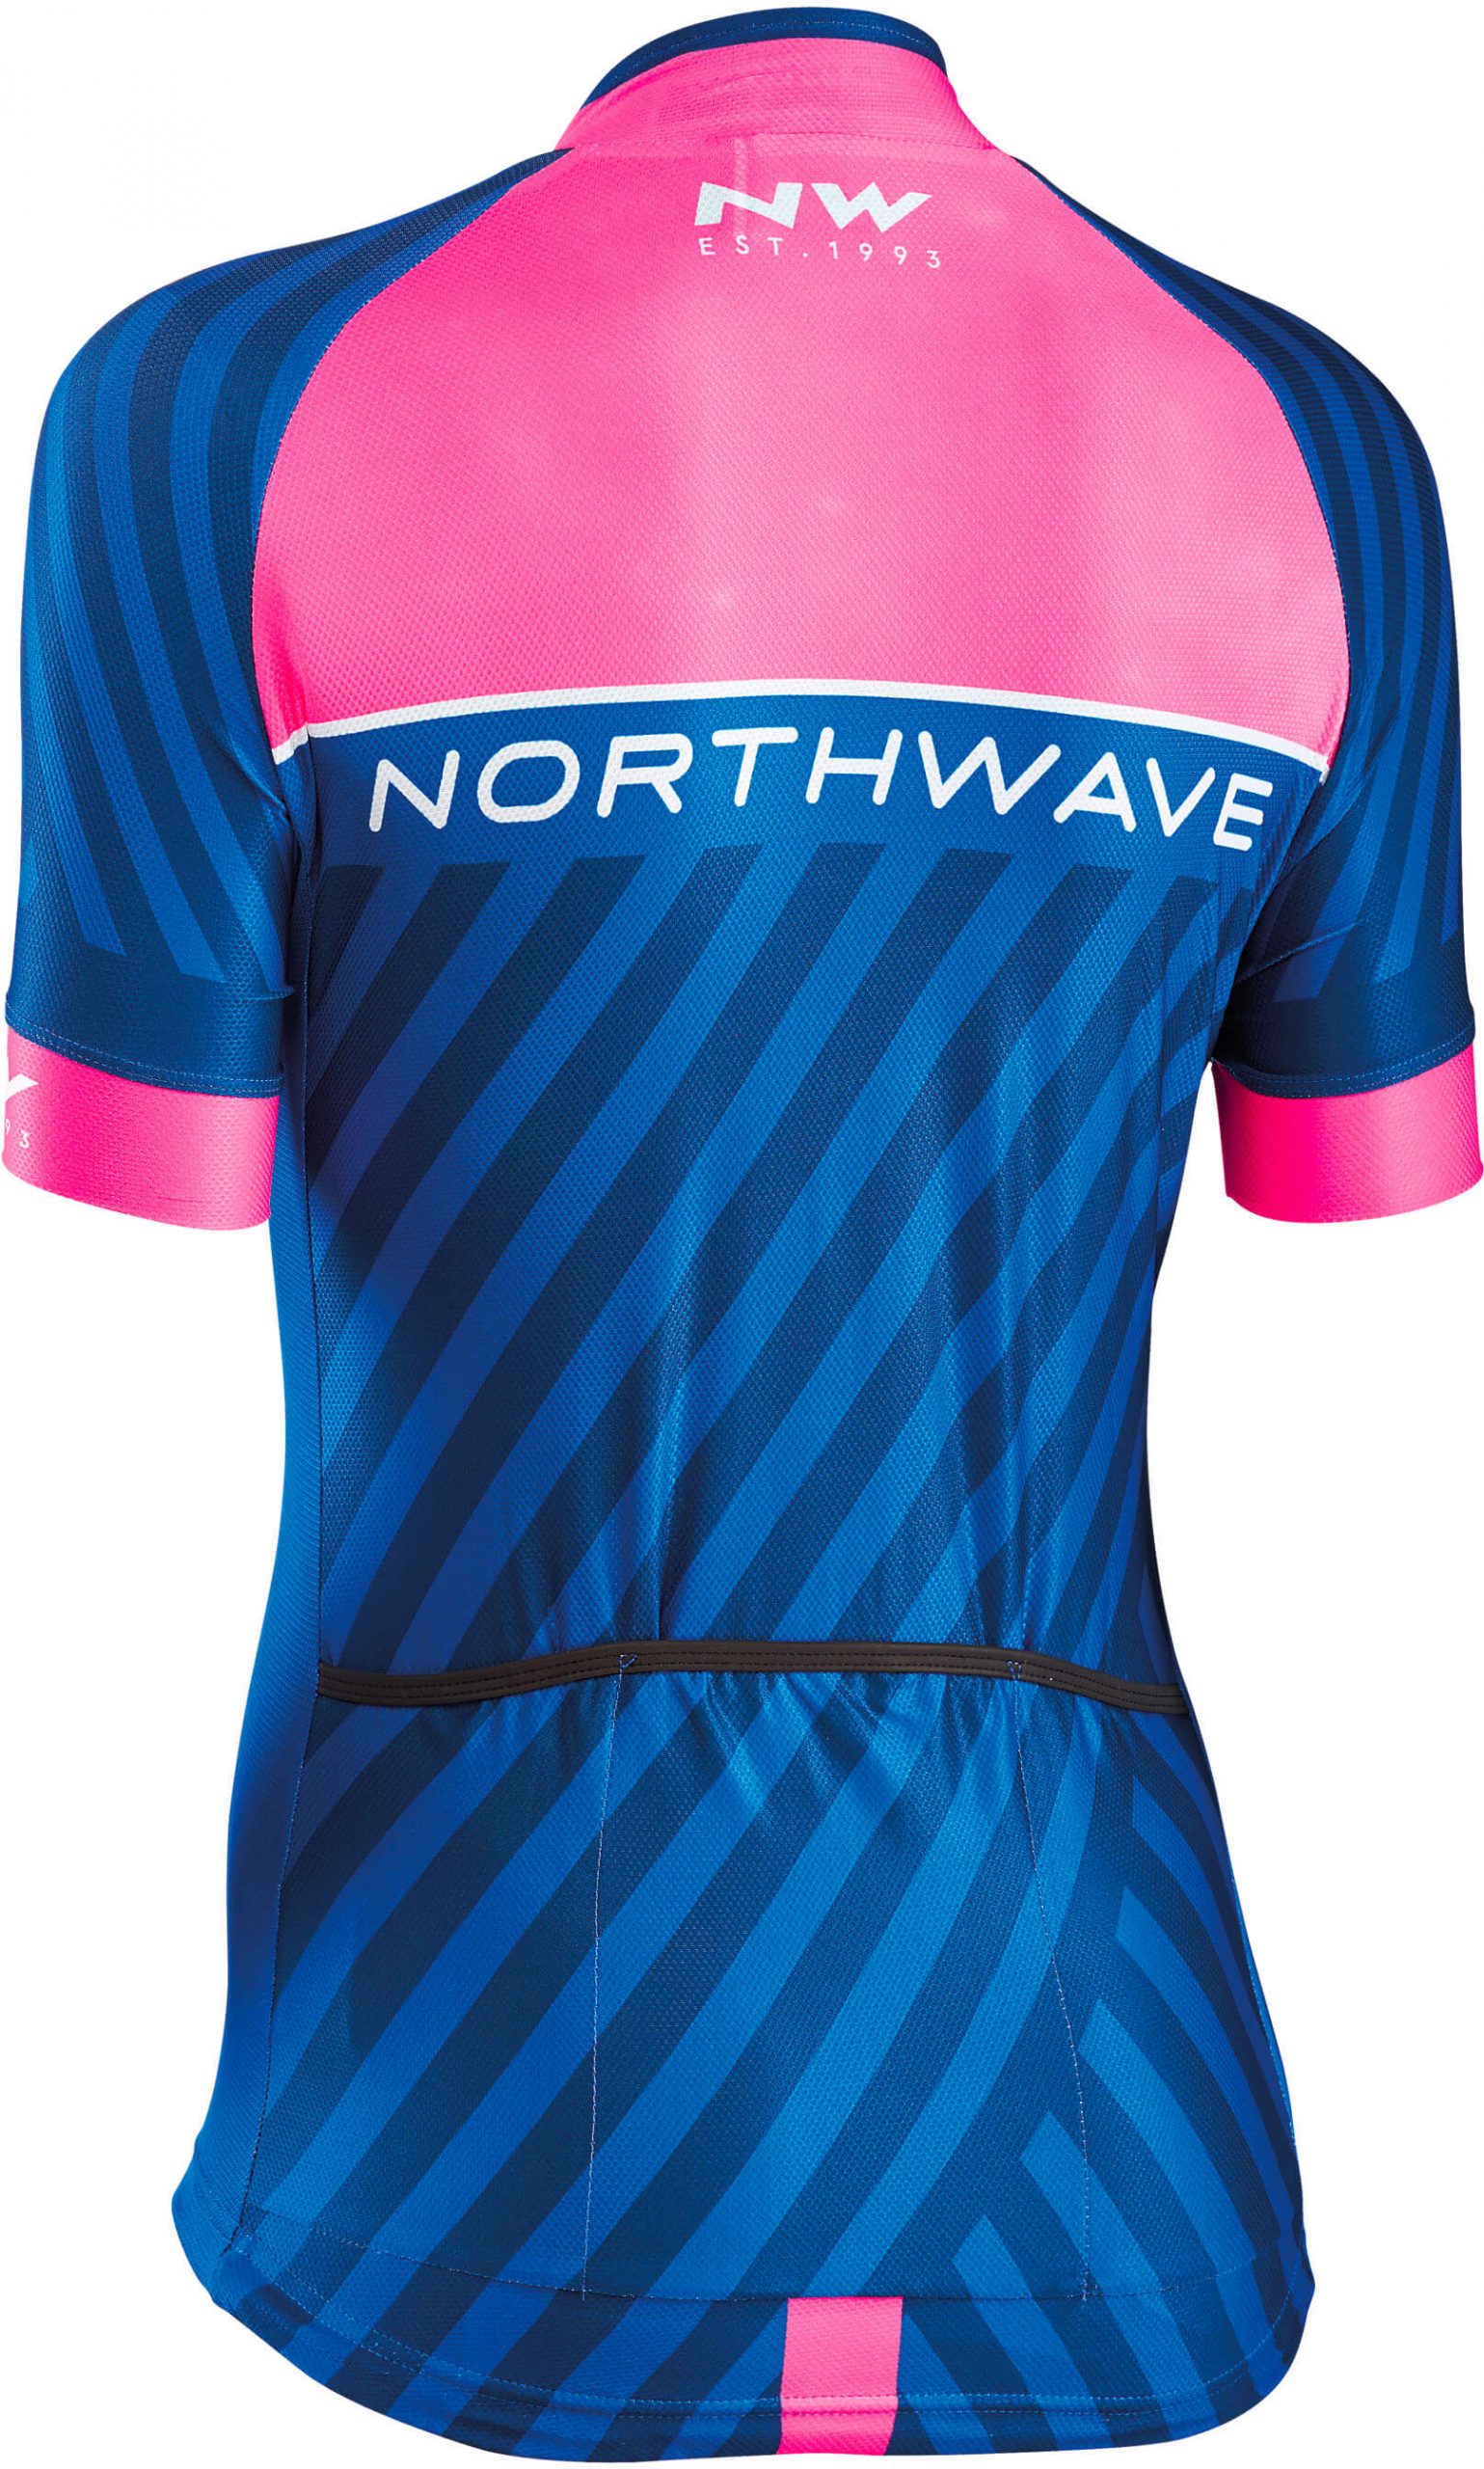 northwave_logo